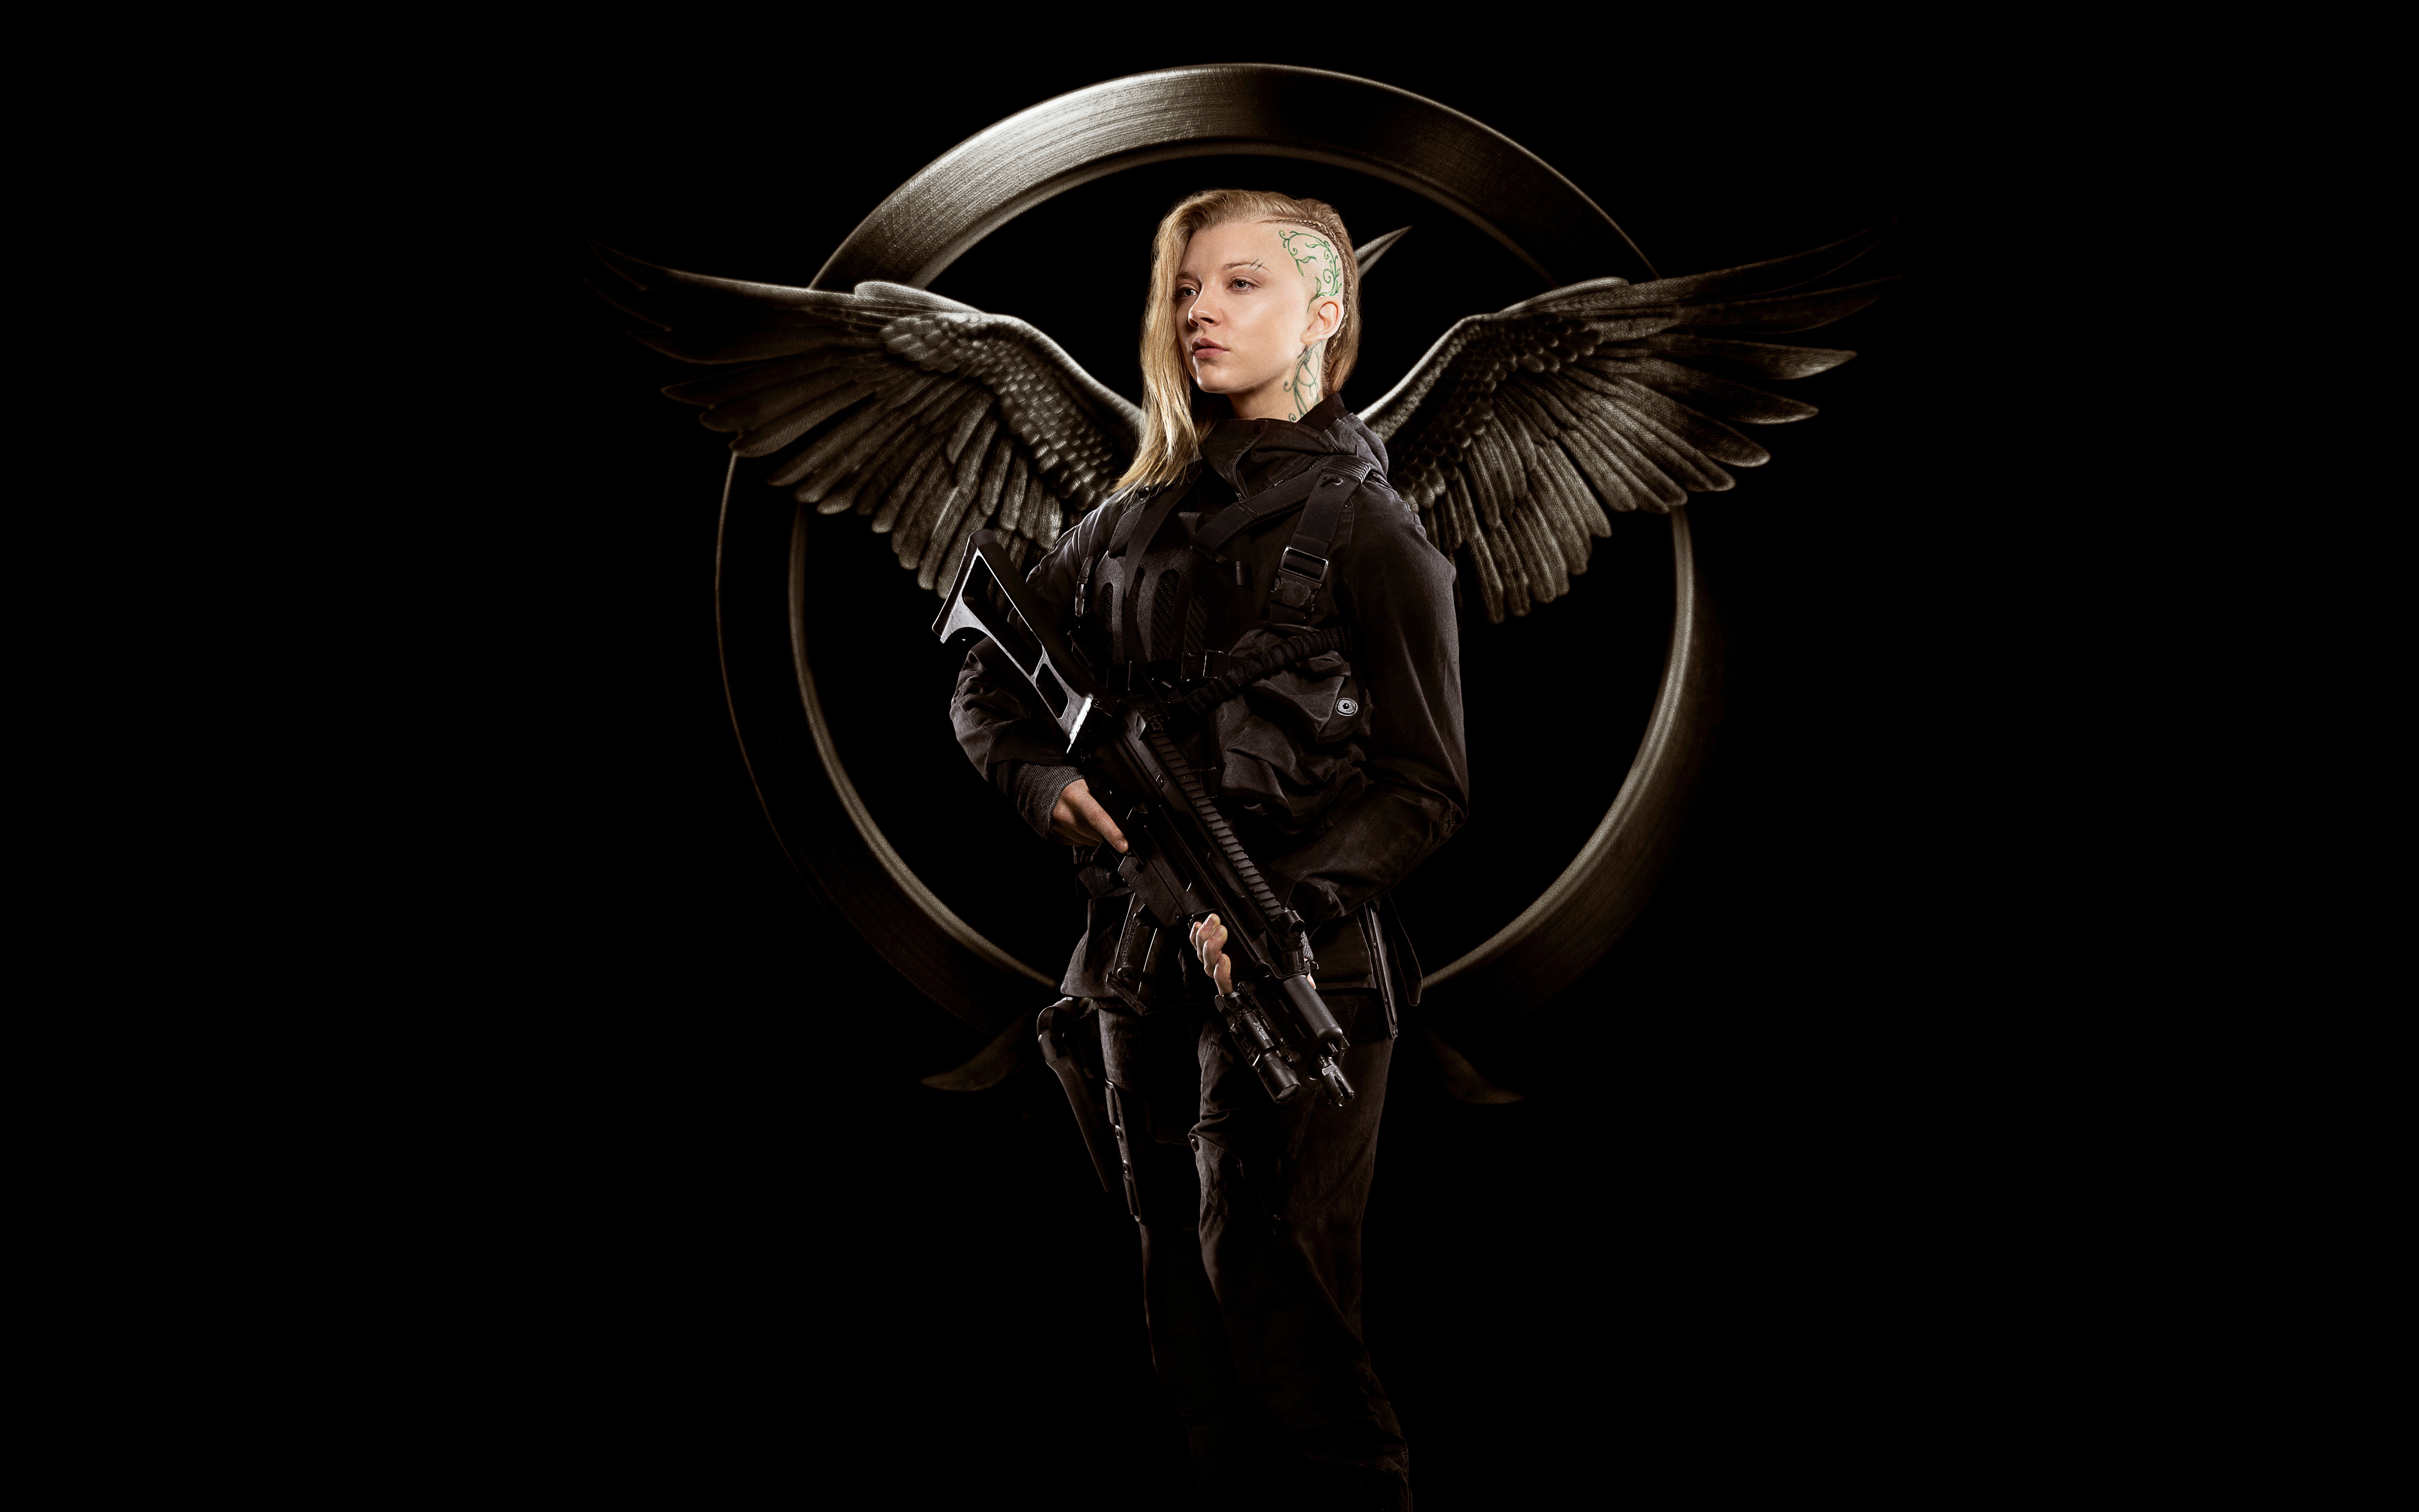 Natalie Dormer Hunger Games Actress Women Blonde Girls With Guns Movie Poster 7500x4688